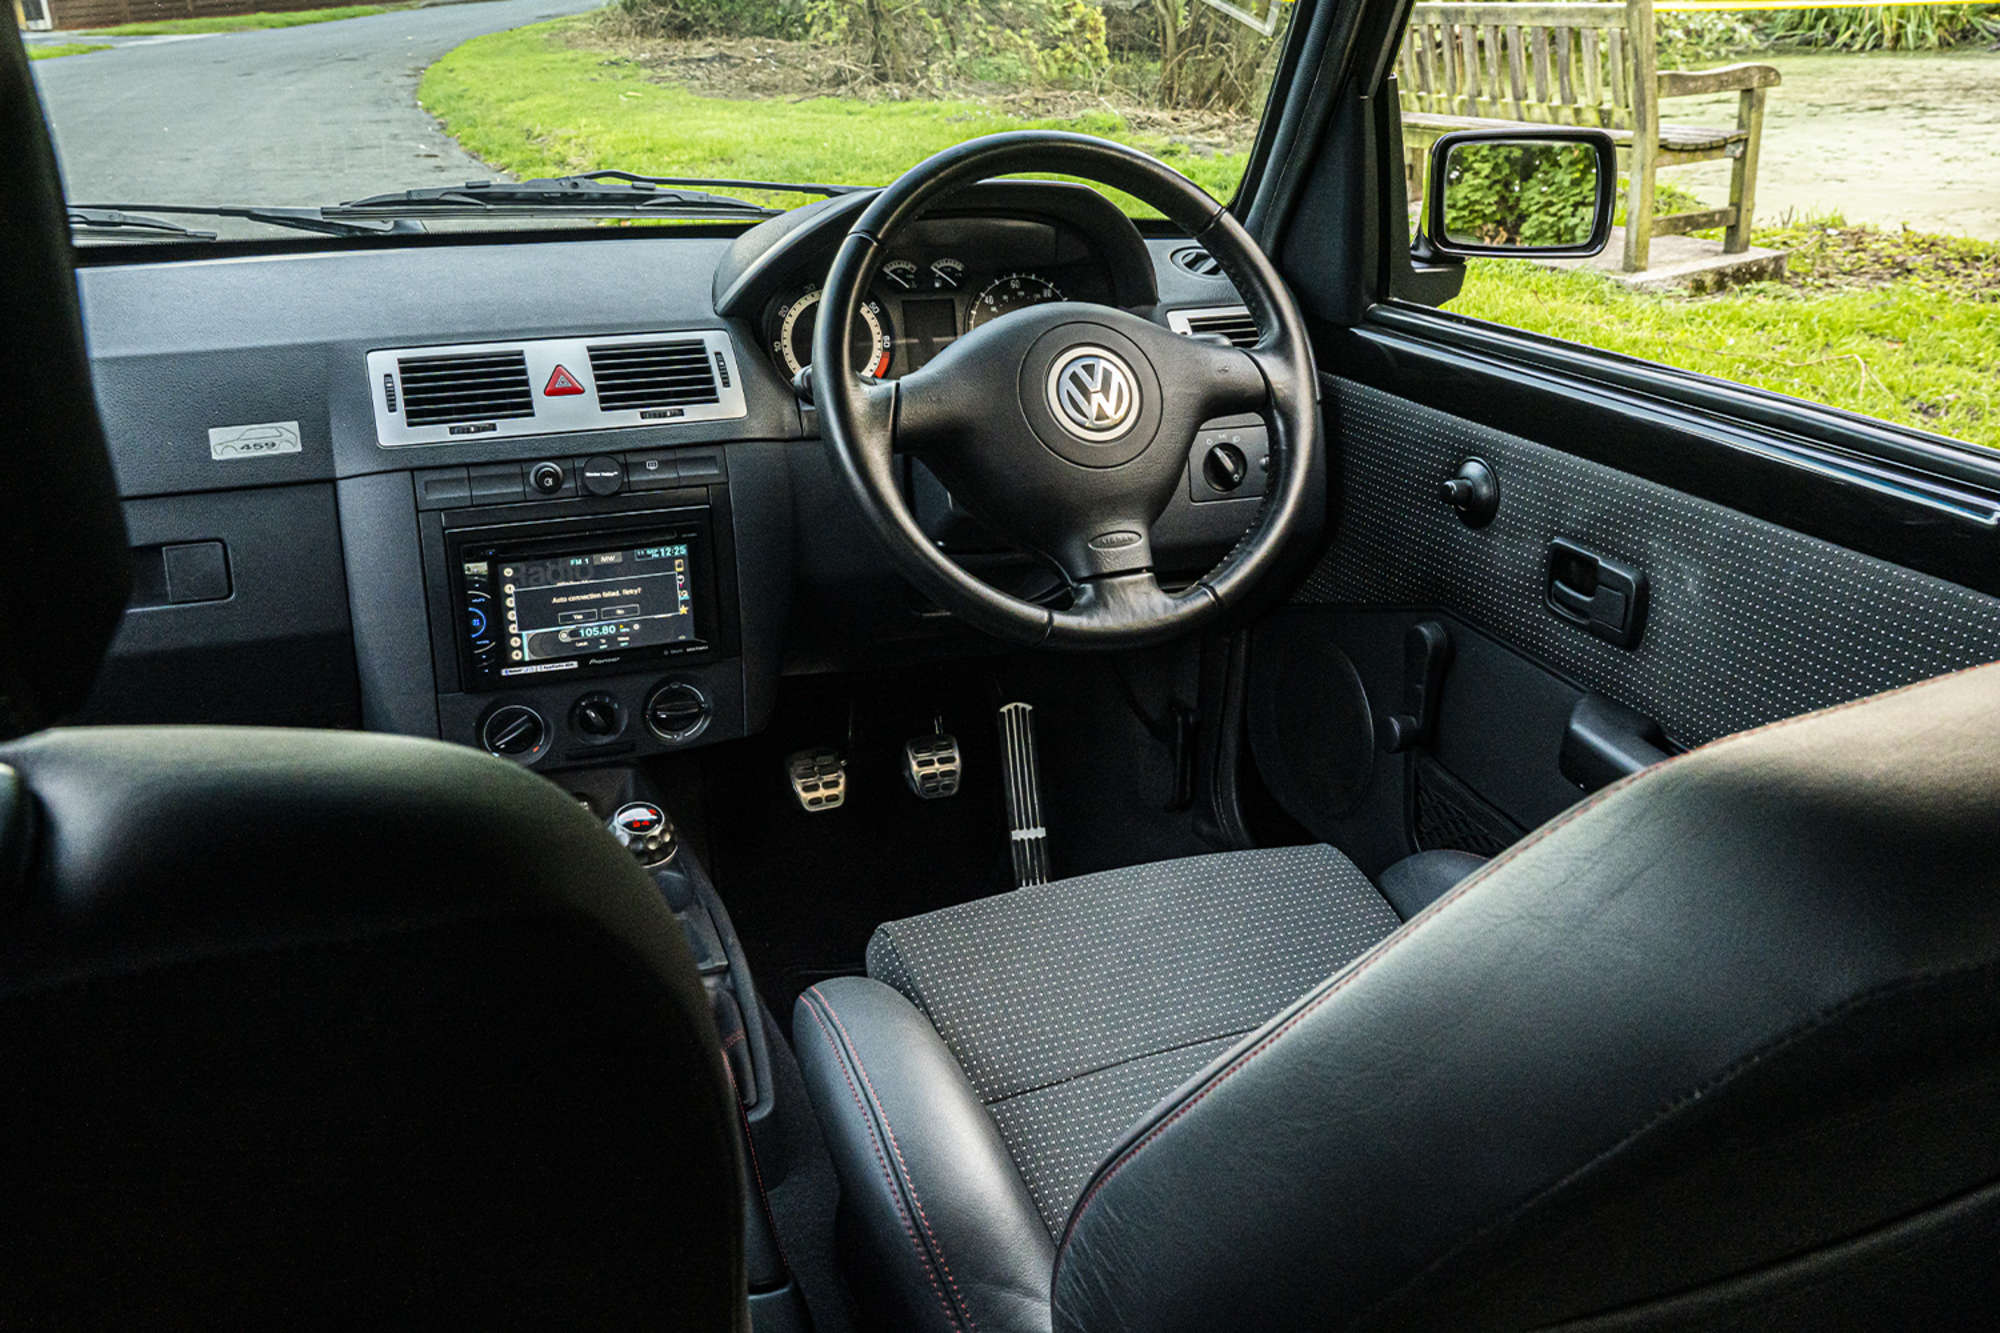 Interior of Citi Golf Mk1